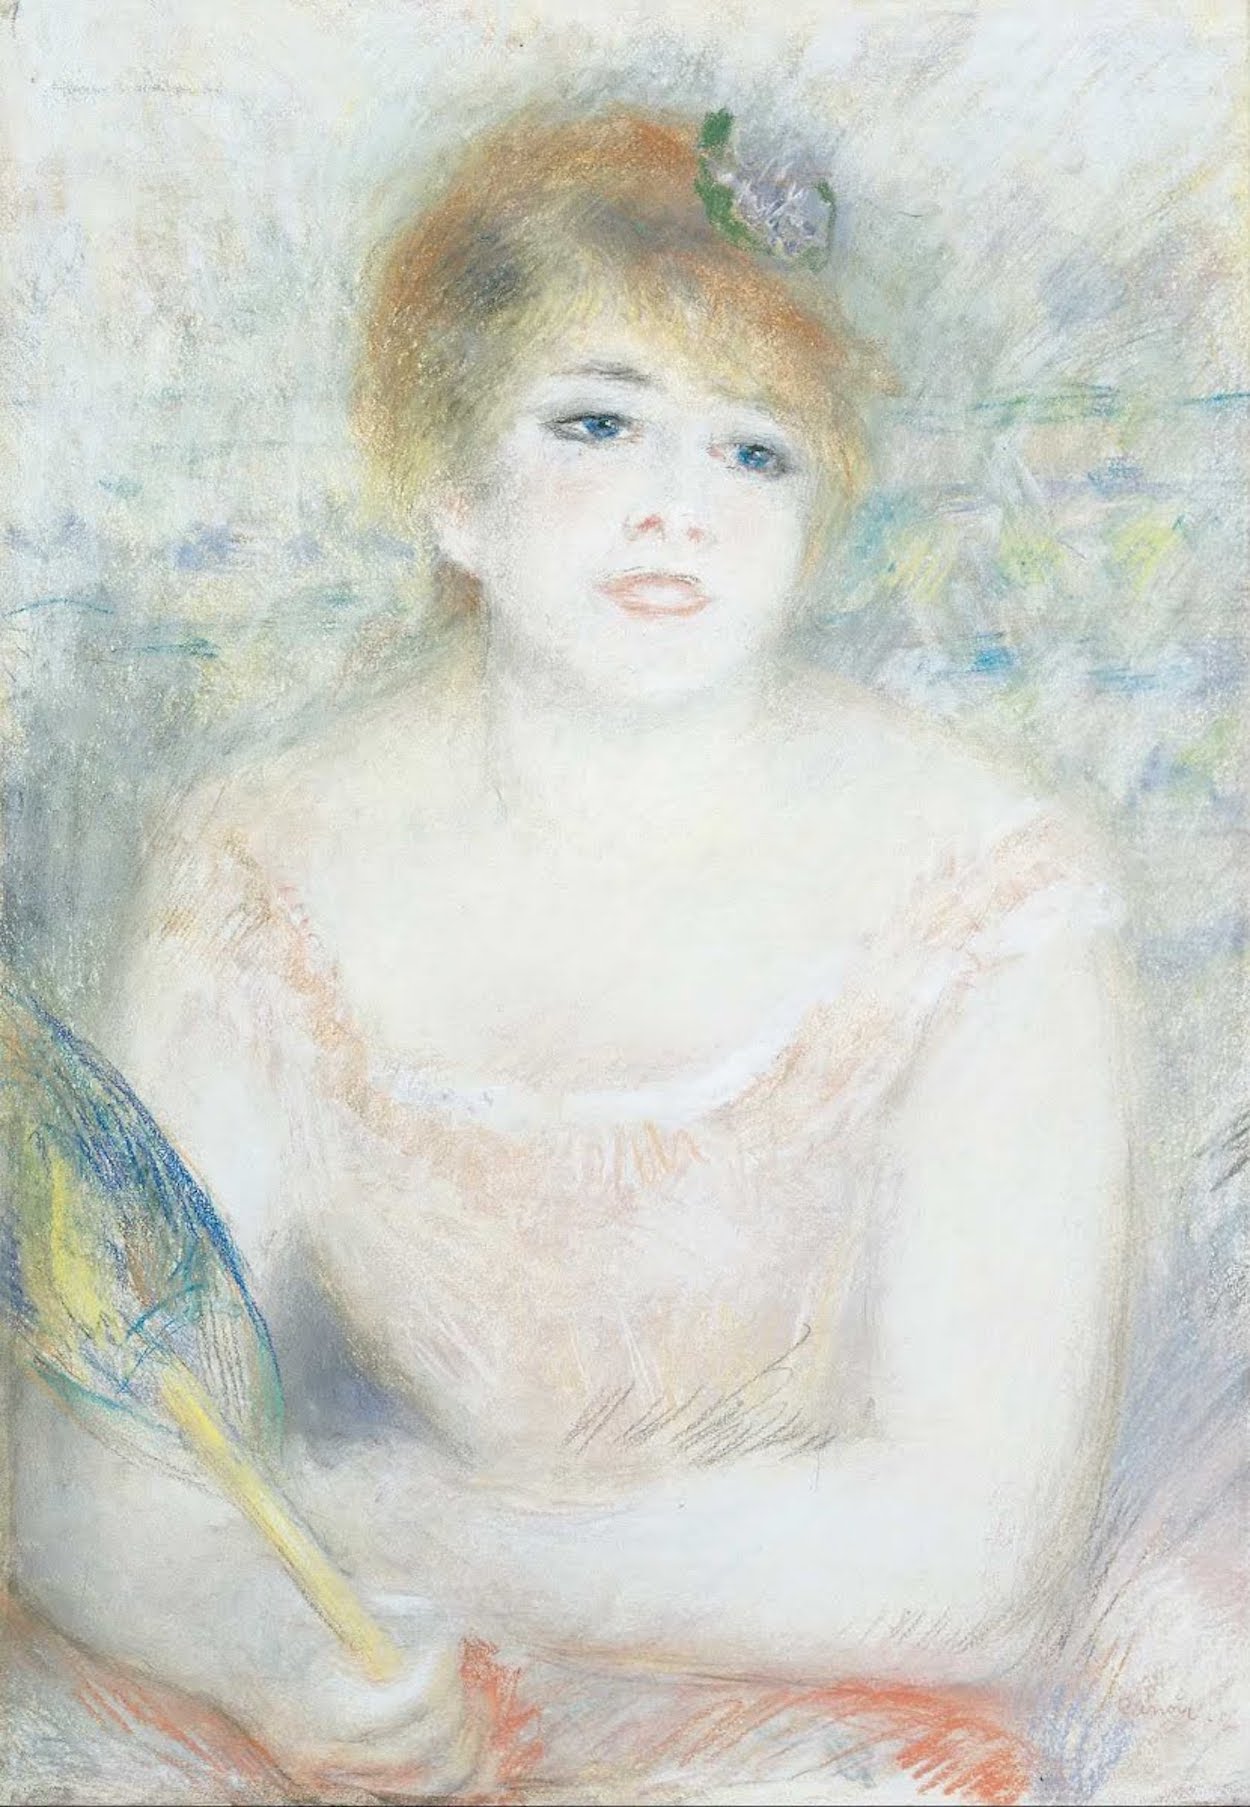 Mlle. Jeanne Samary by Pierre-Auguste Renoir - c. 1878 - 69.7 x 47.7 cm 